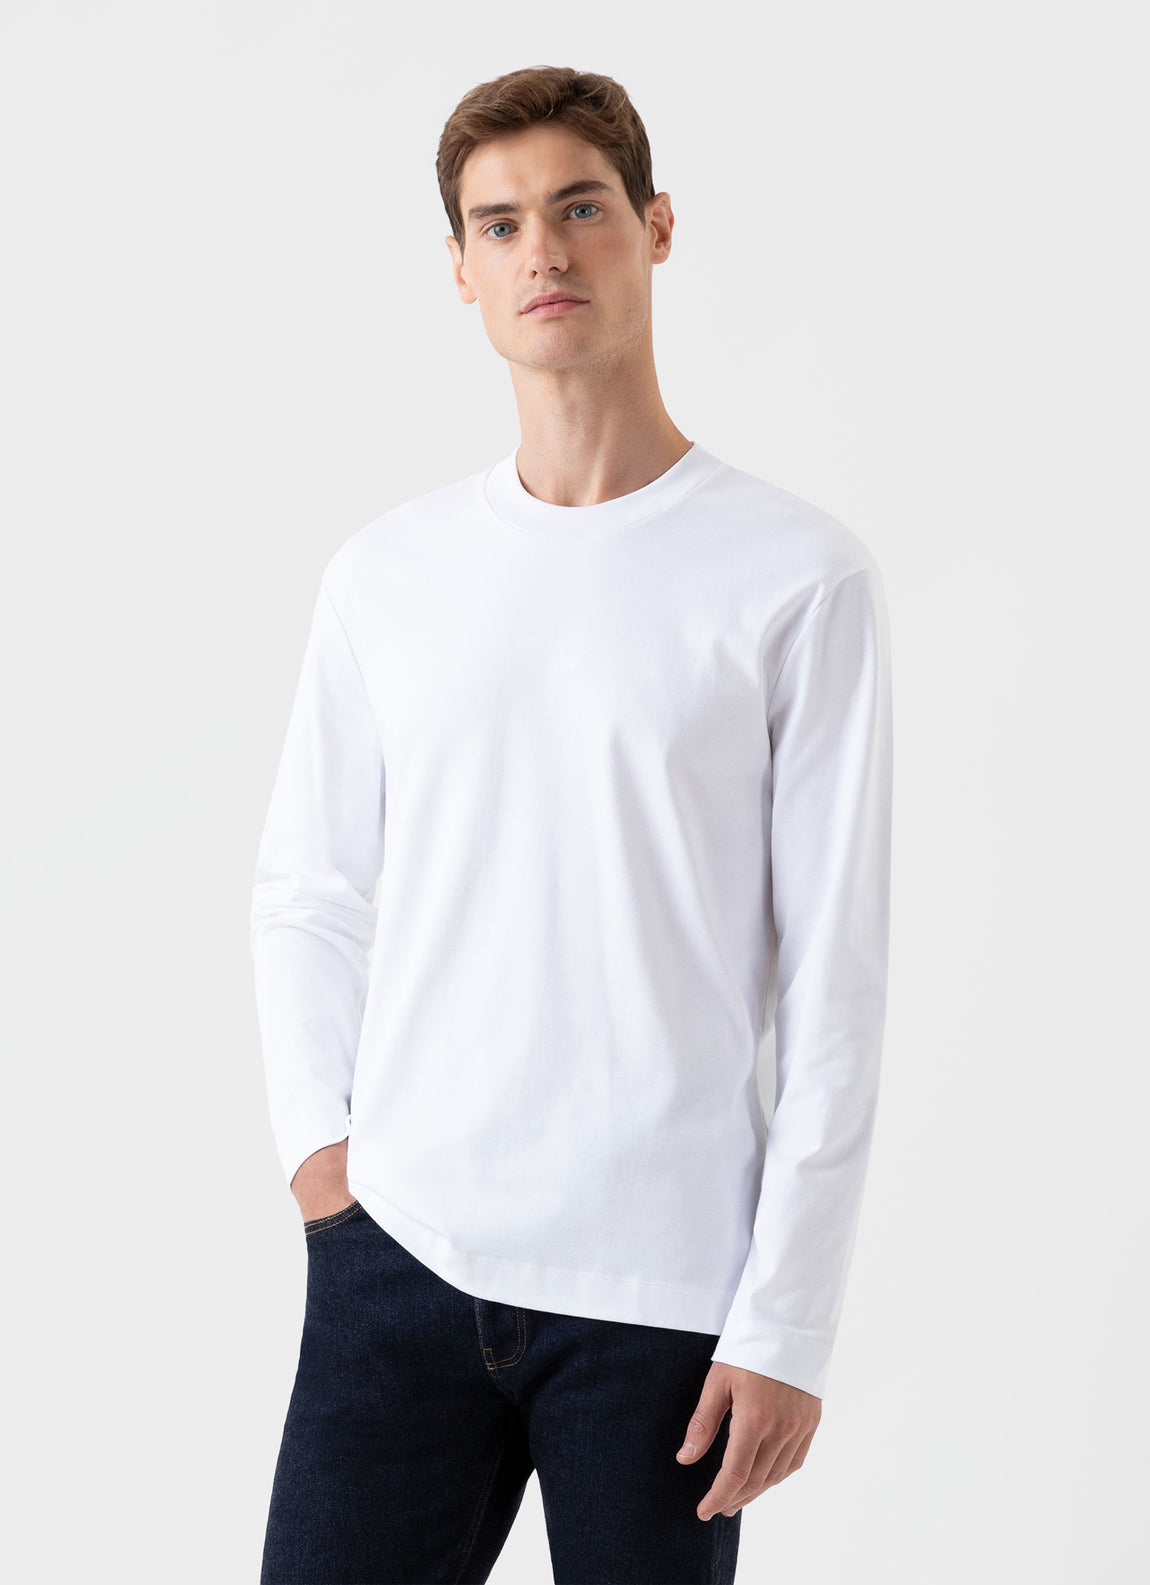 Men's Long Sleeve Heavyweight T-shirt in White | Sunspel